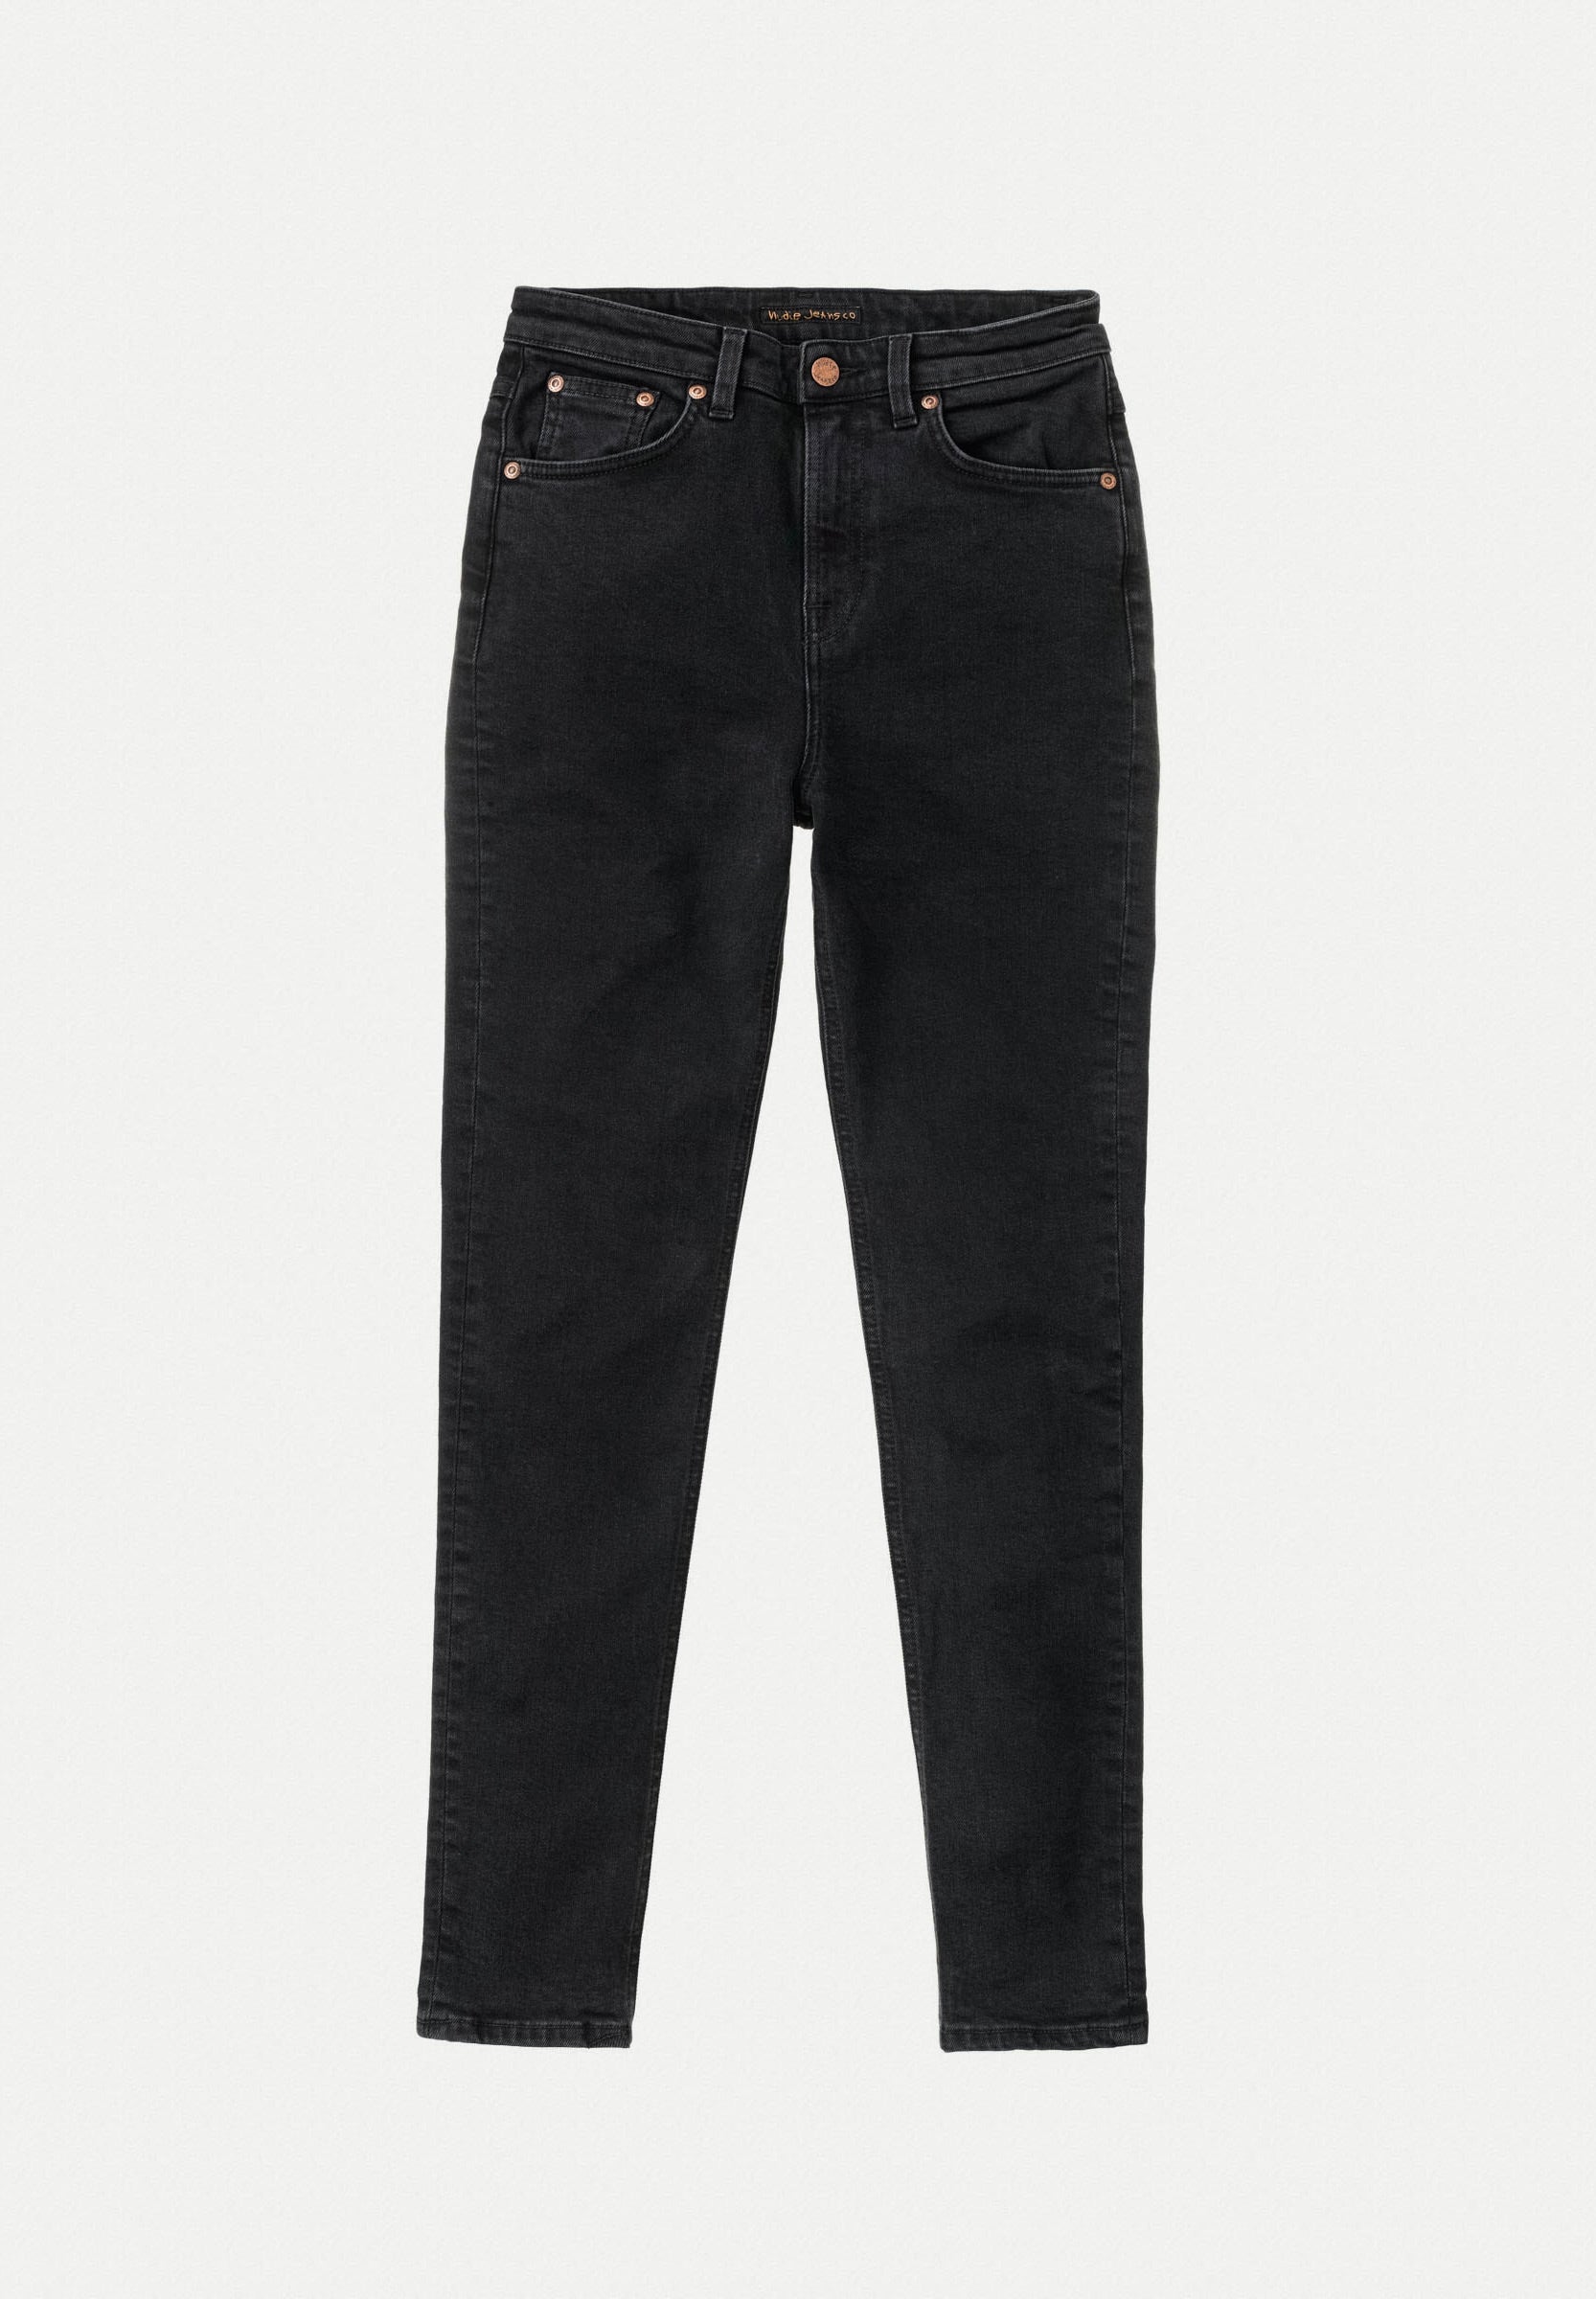 jeans high top tilde black coal